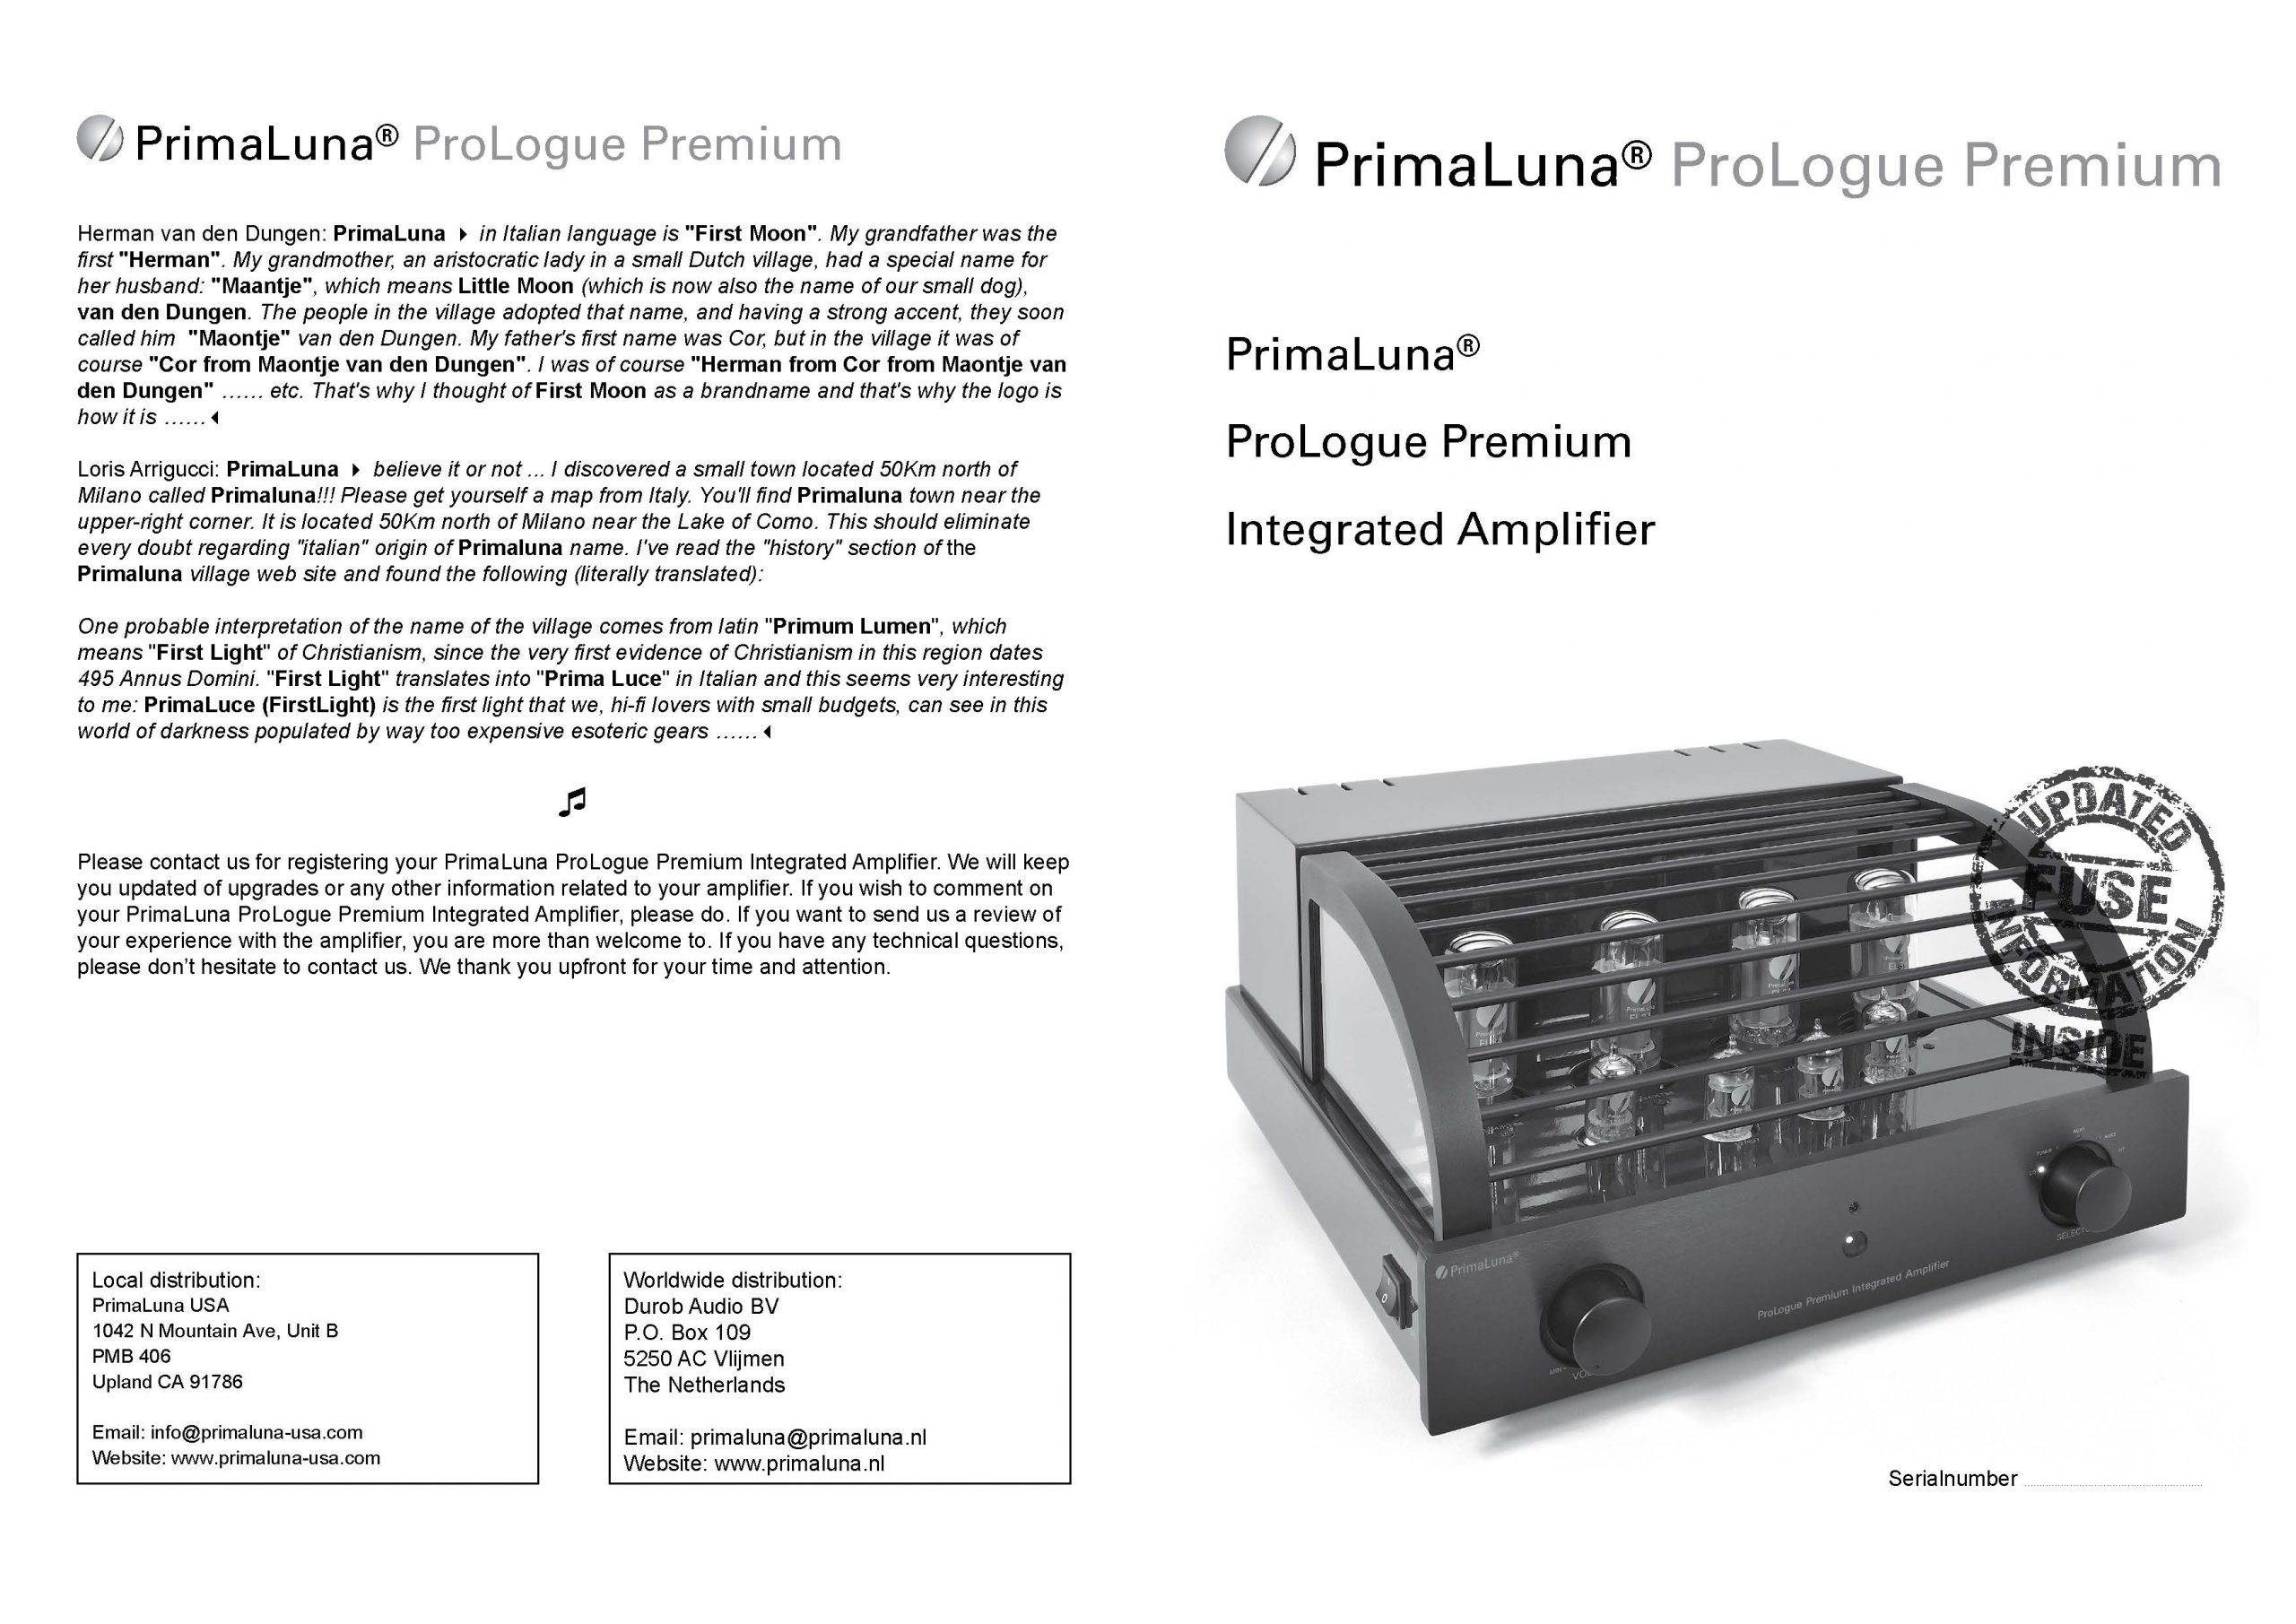 PrimaLuna ProLogue Premium Integrated Amplifier User Manual - Norman Audio